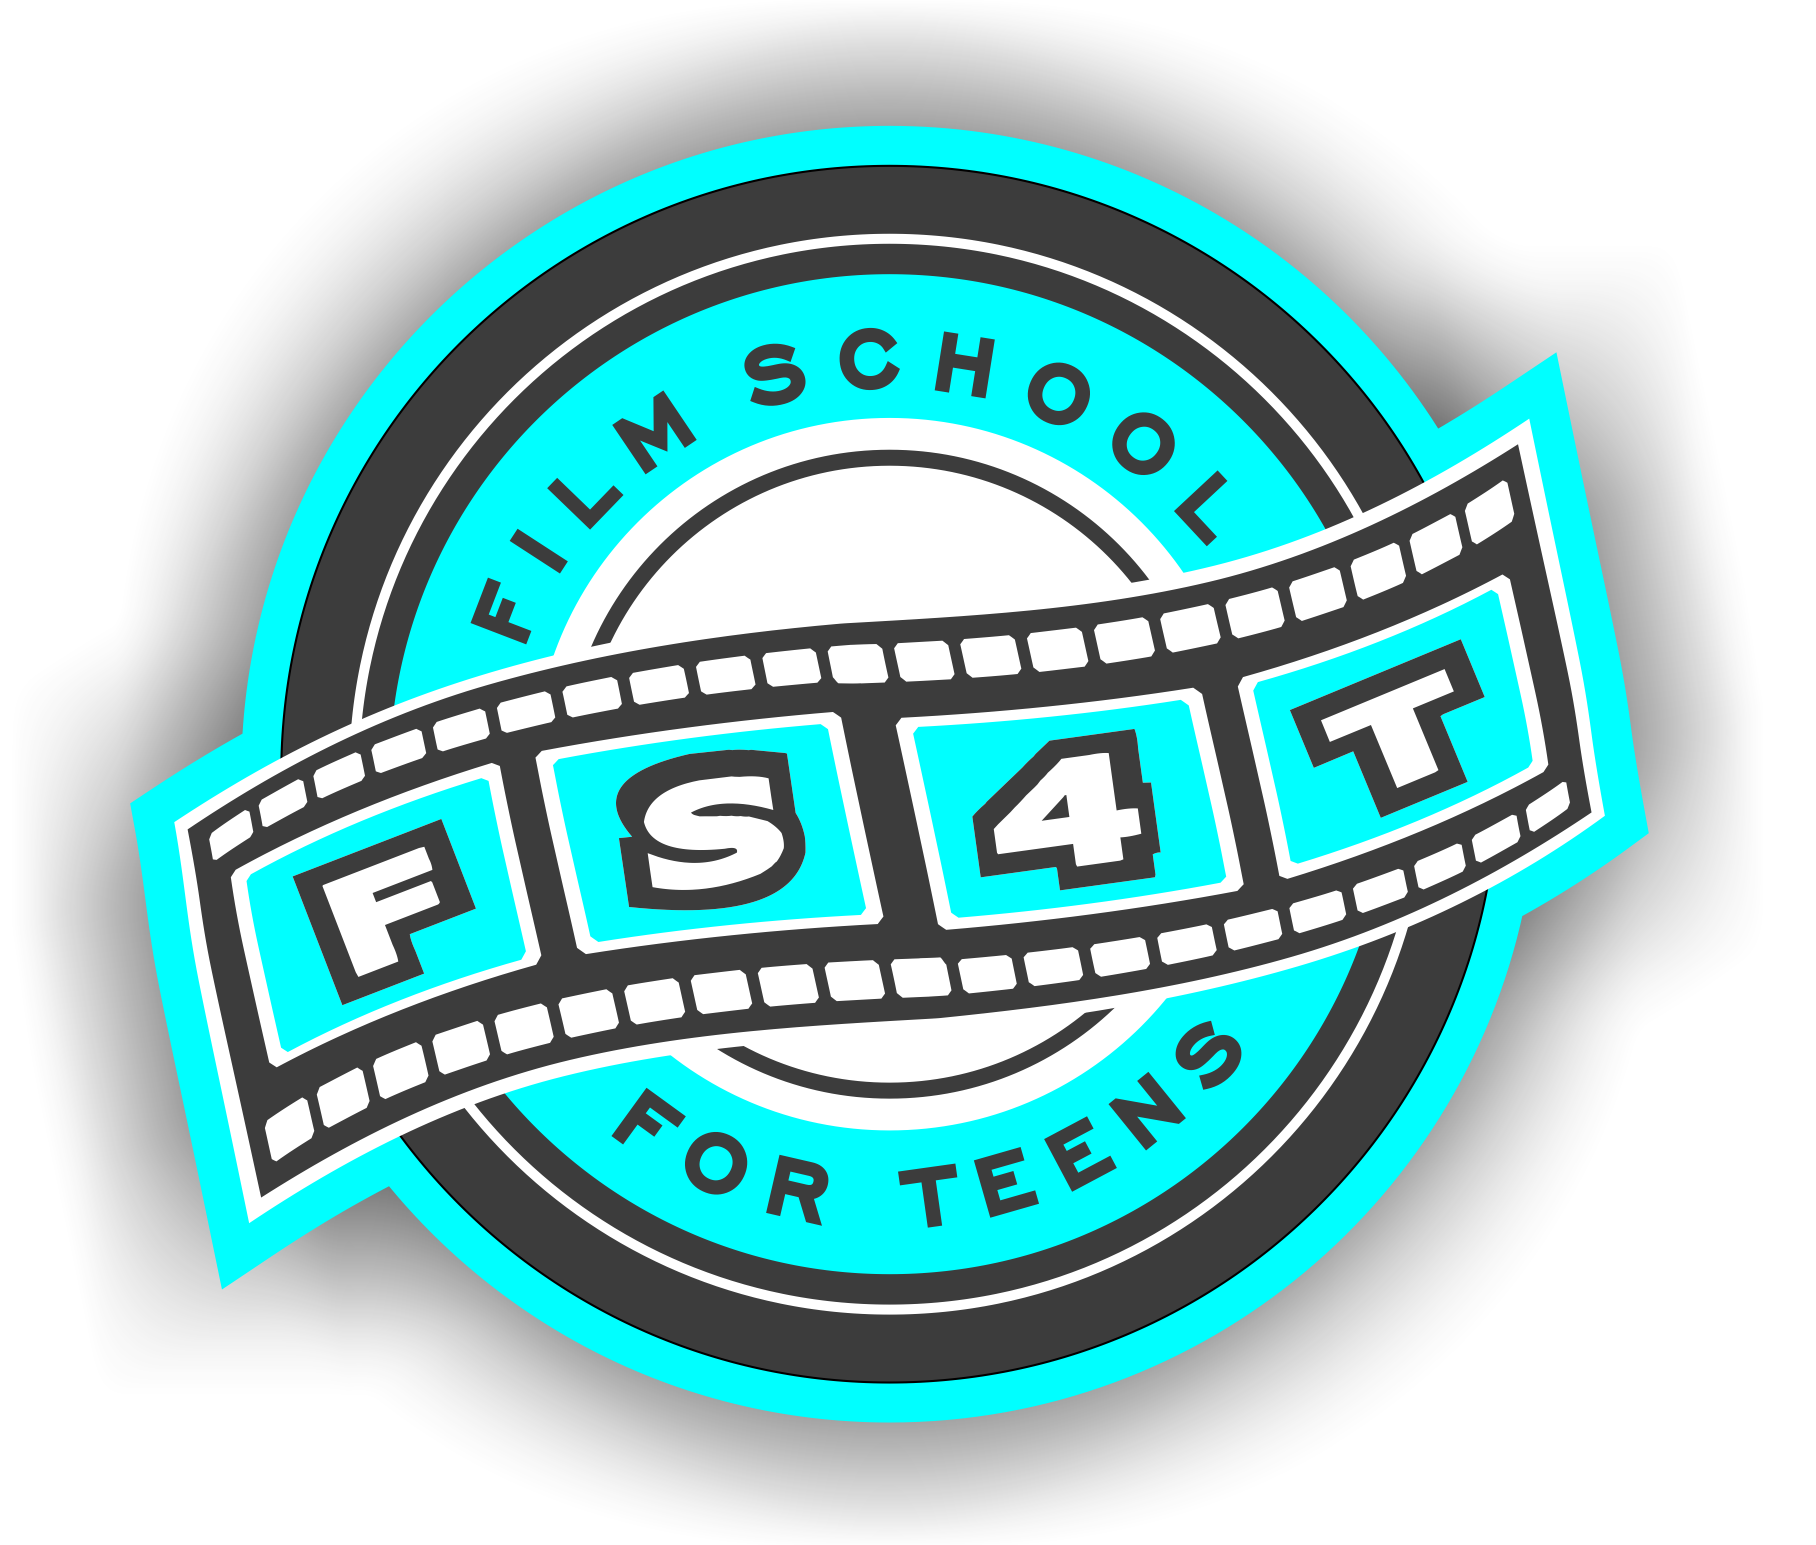 Film School 4 Teens and Electives 4 Teens Ohio logo